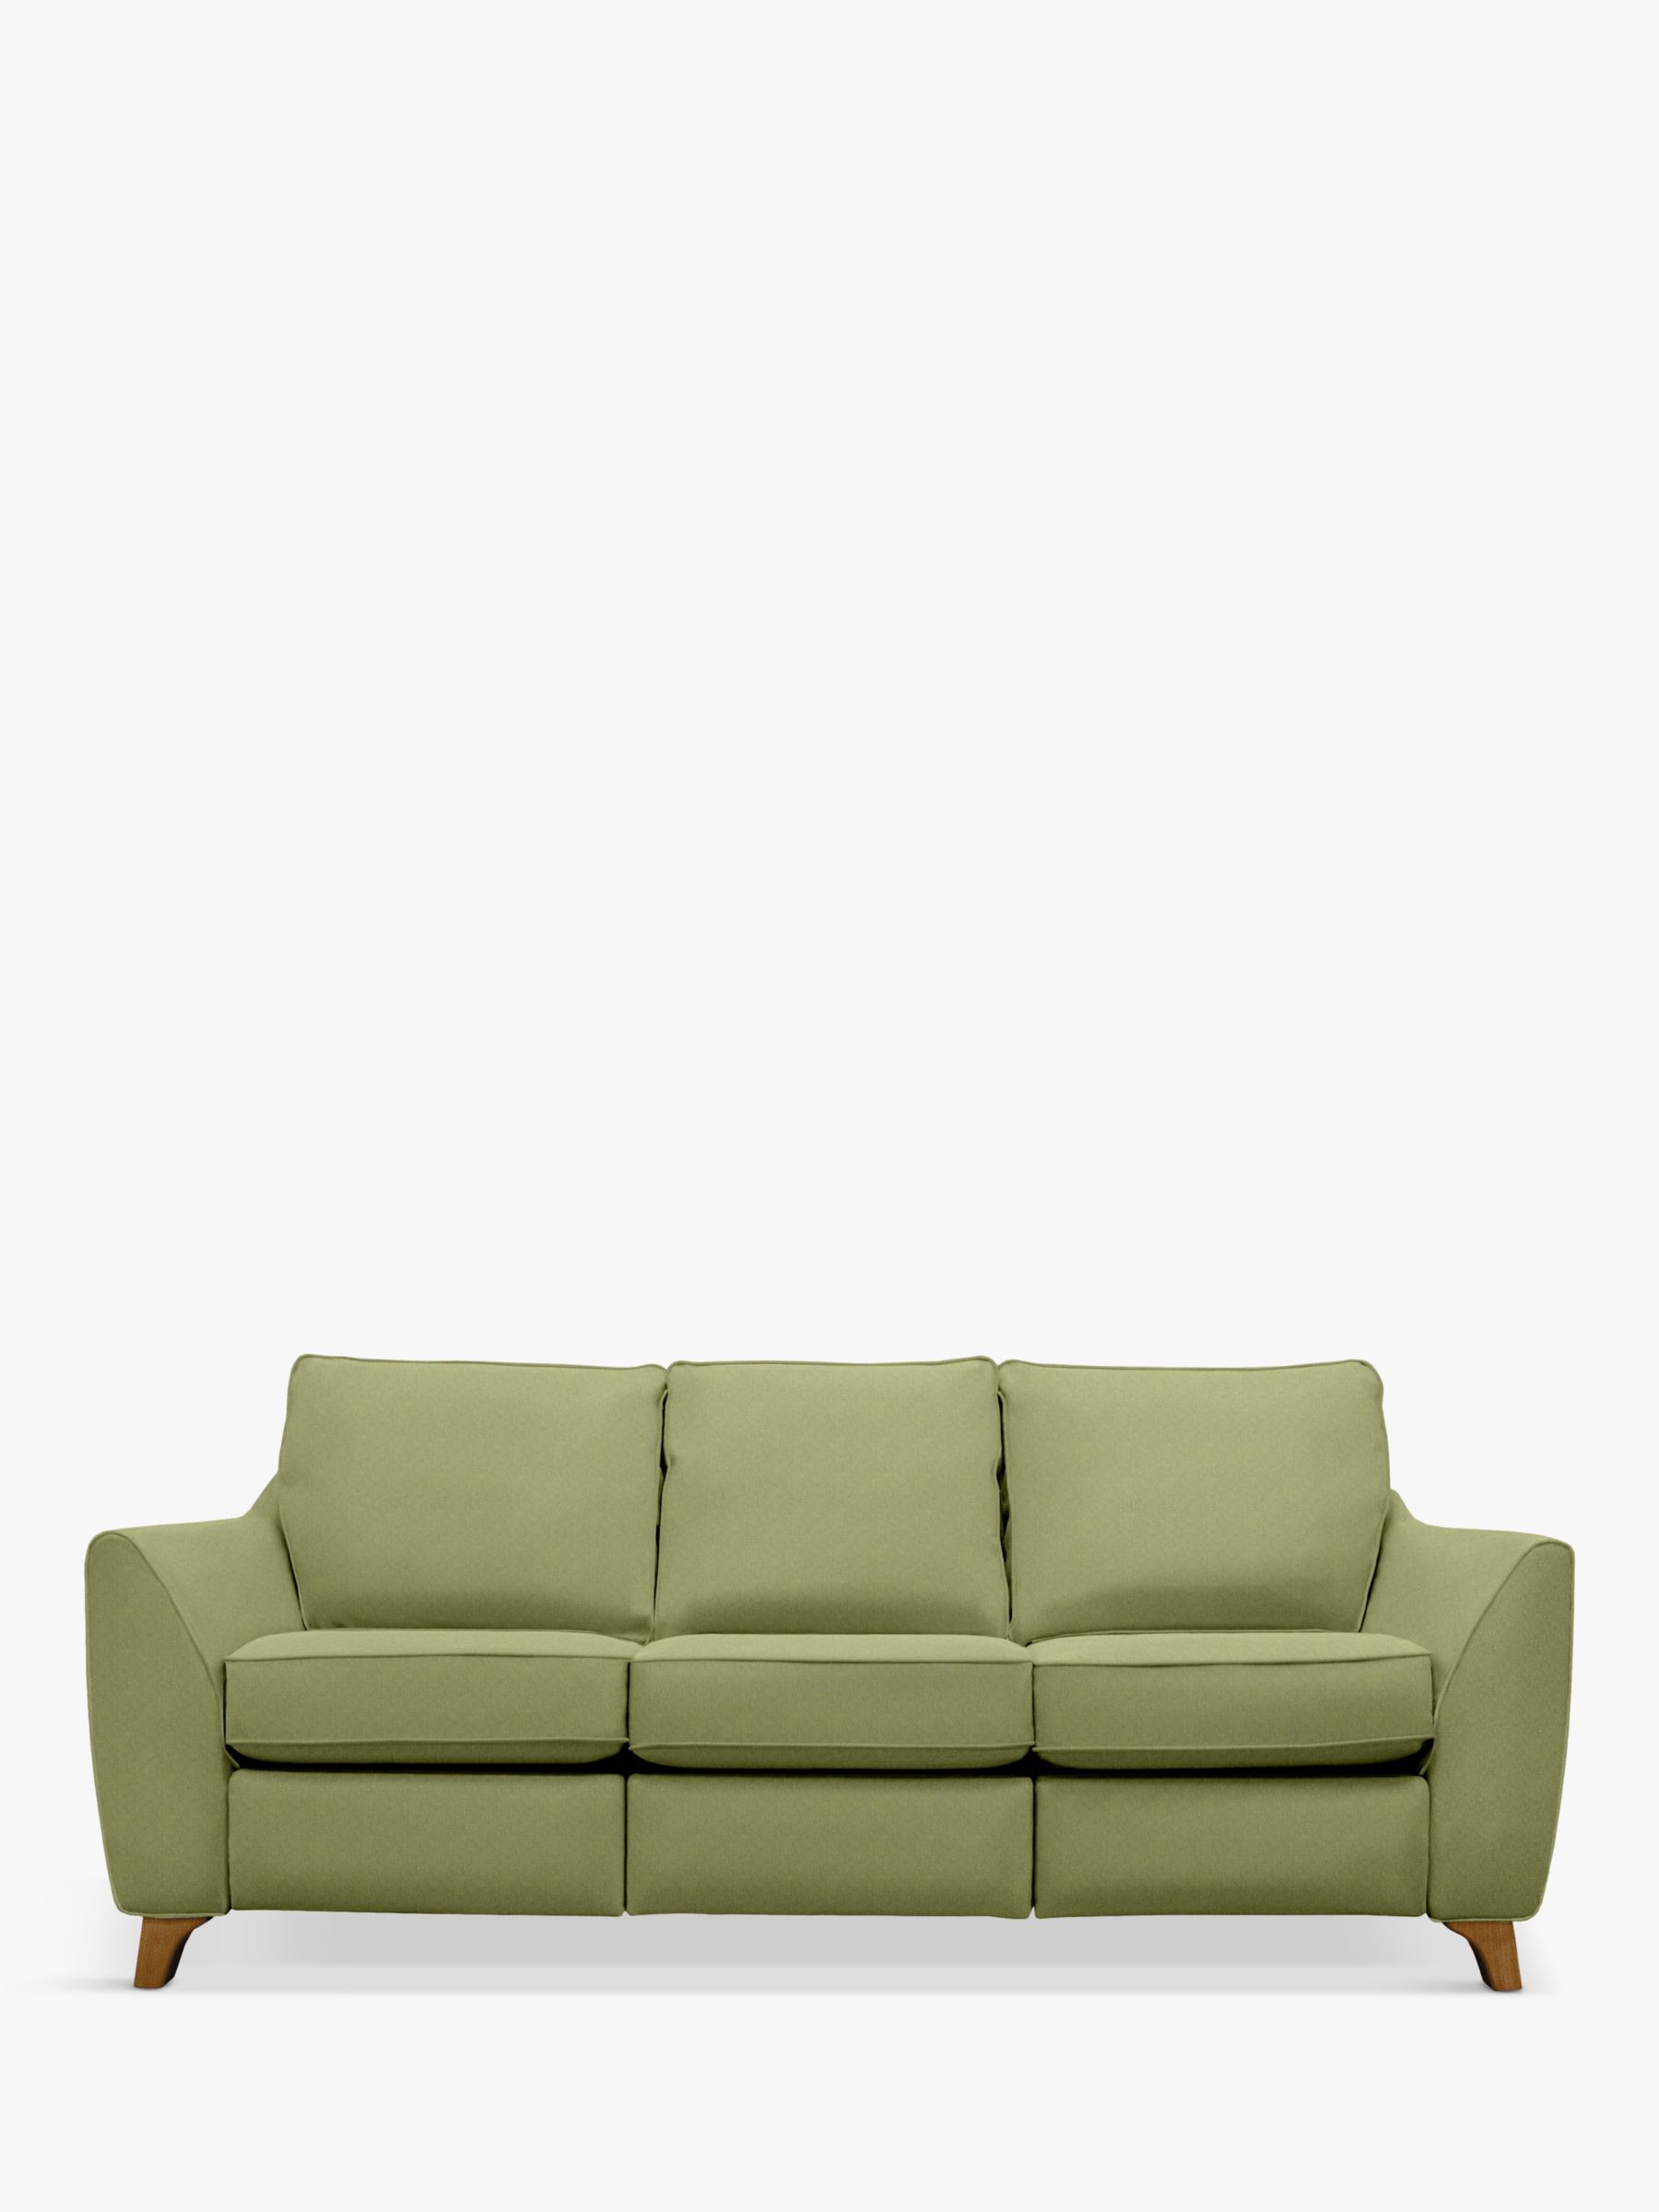 Sloane 3 Seater Sofa - Light Sage Green